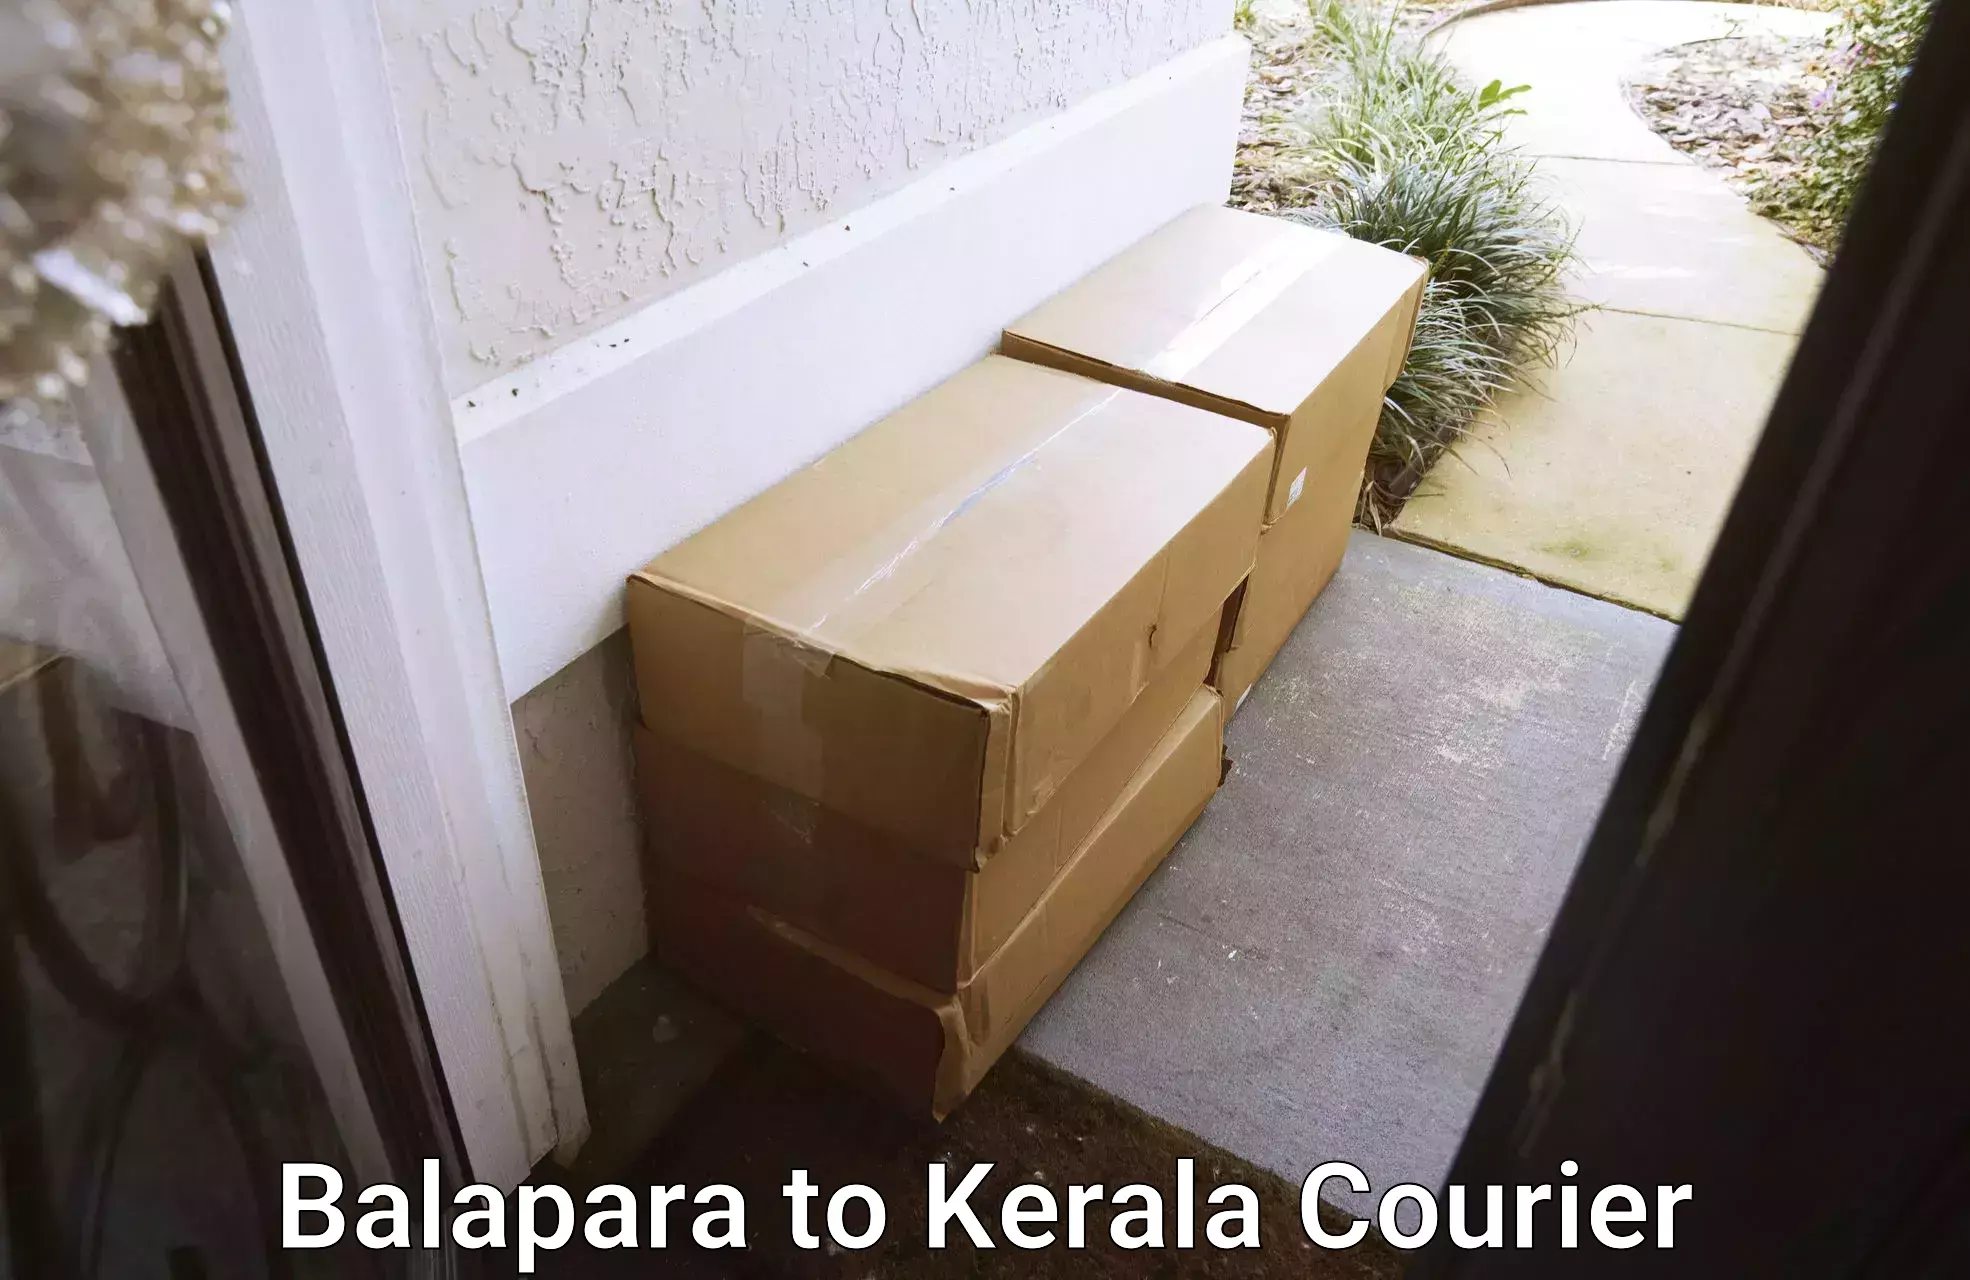 24/7 courier service Balapara to Kochi